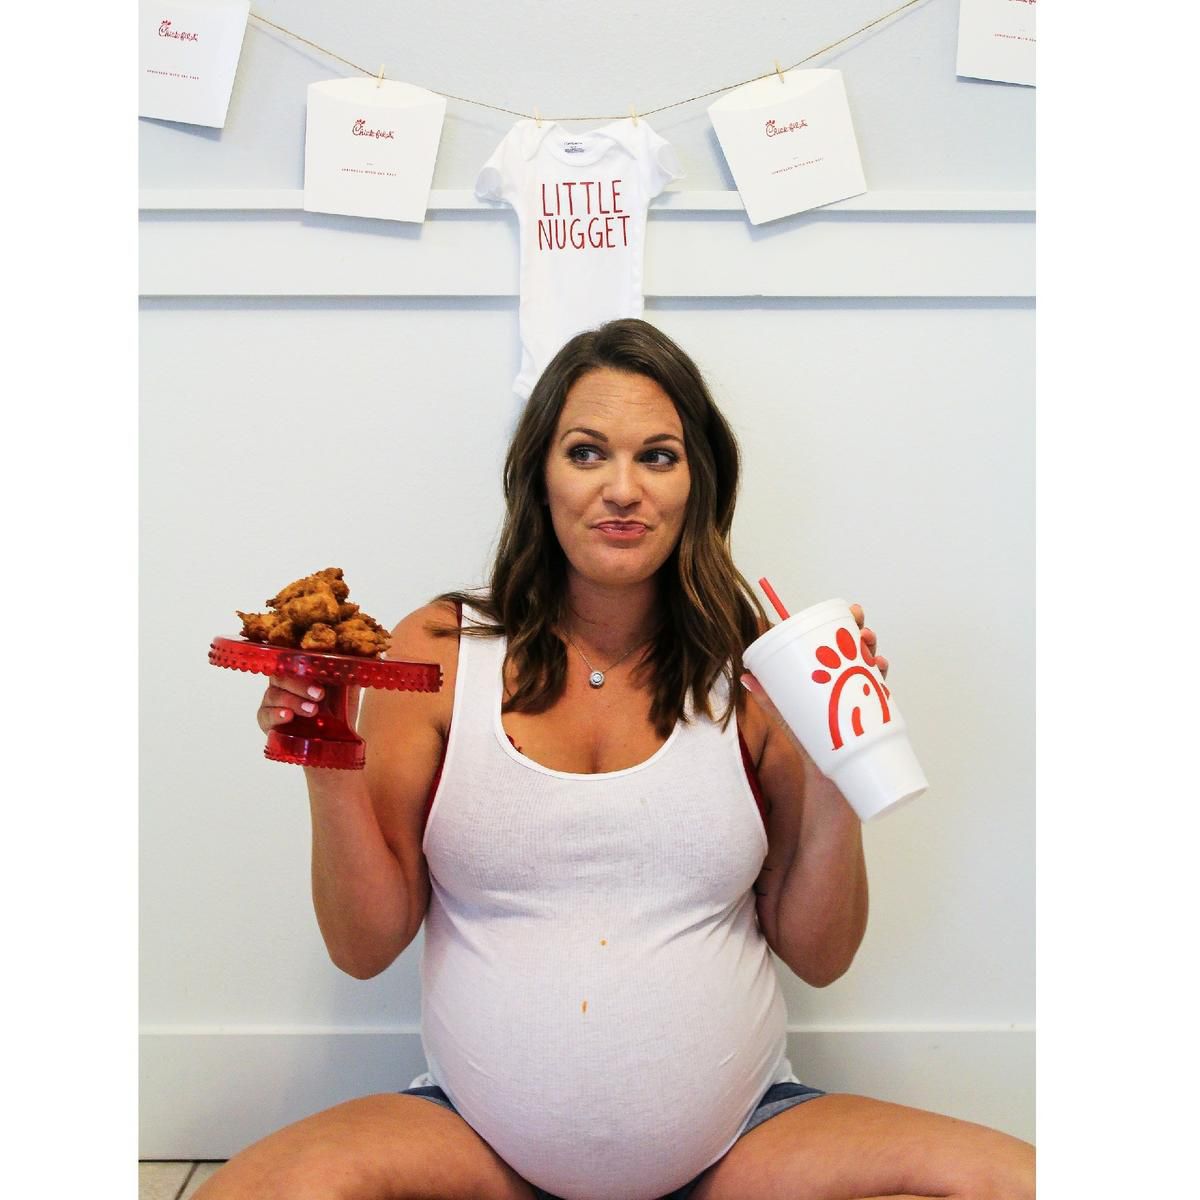 Chick fil a maternity shoot